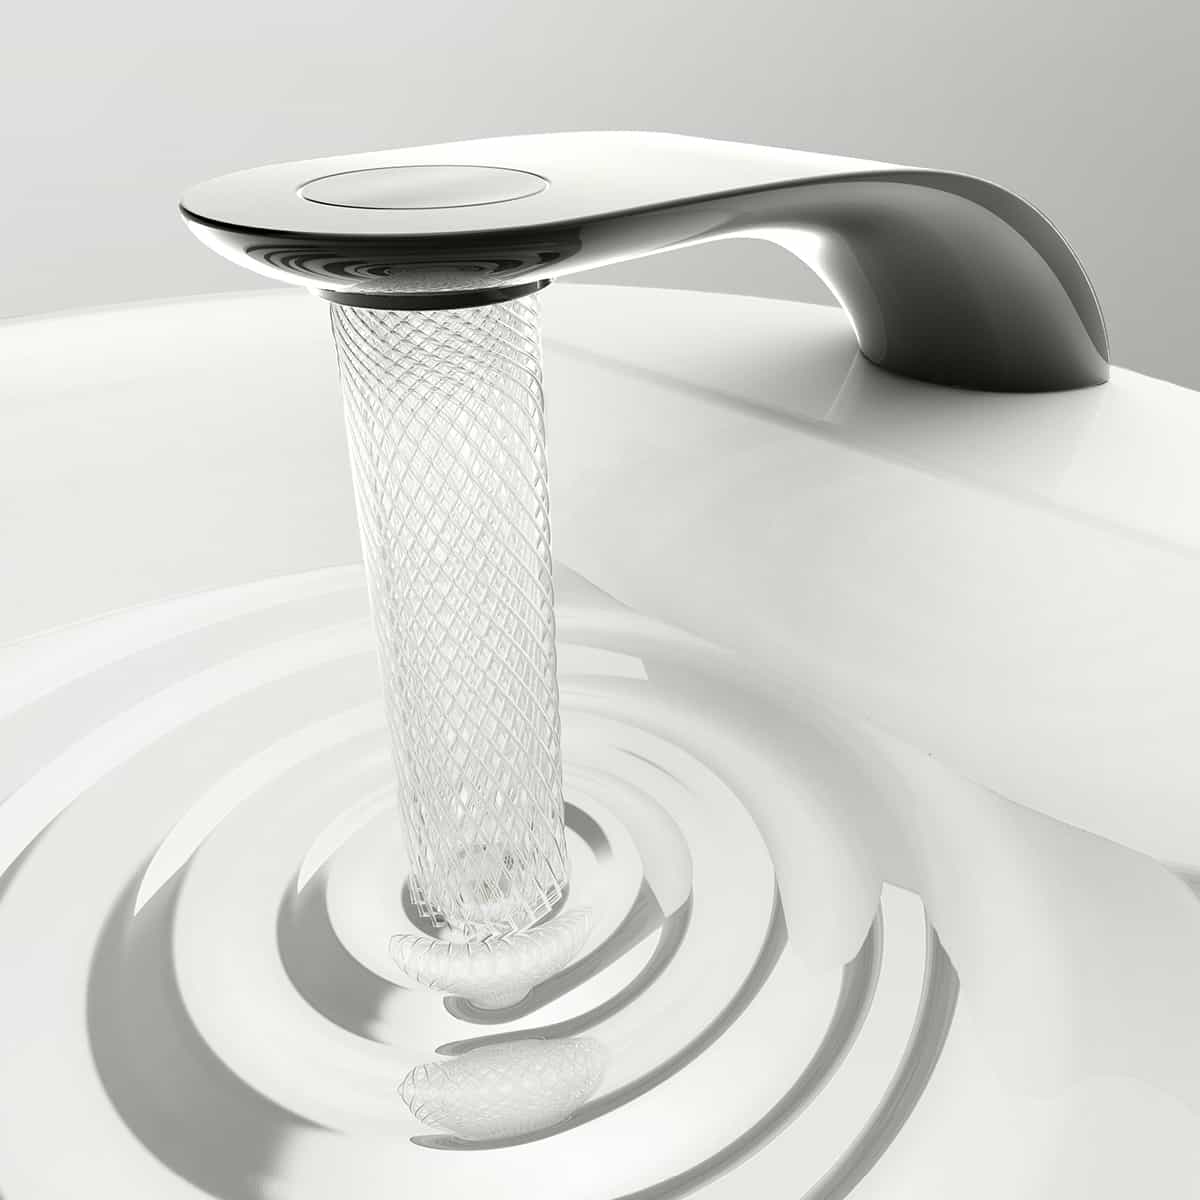 swirl-concept-faucet-simin-qiu.jpg